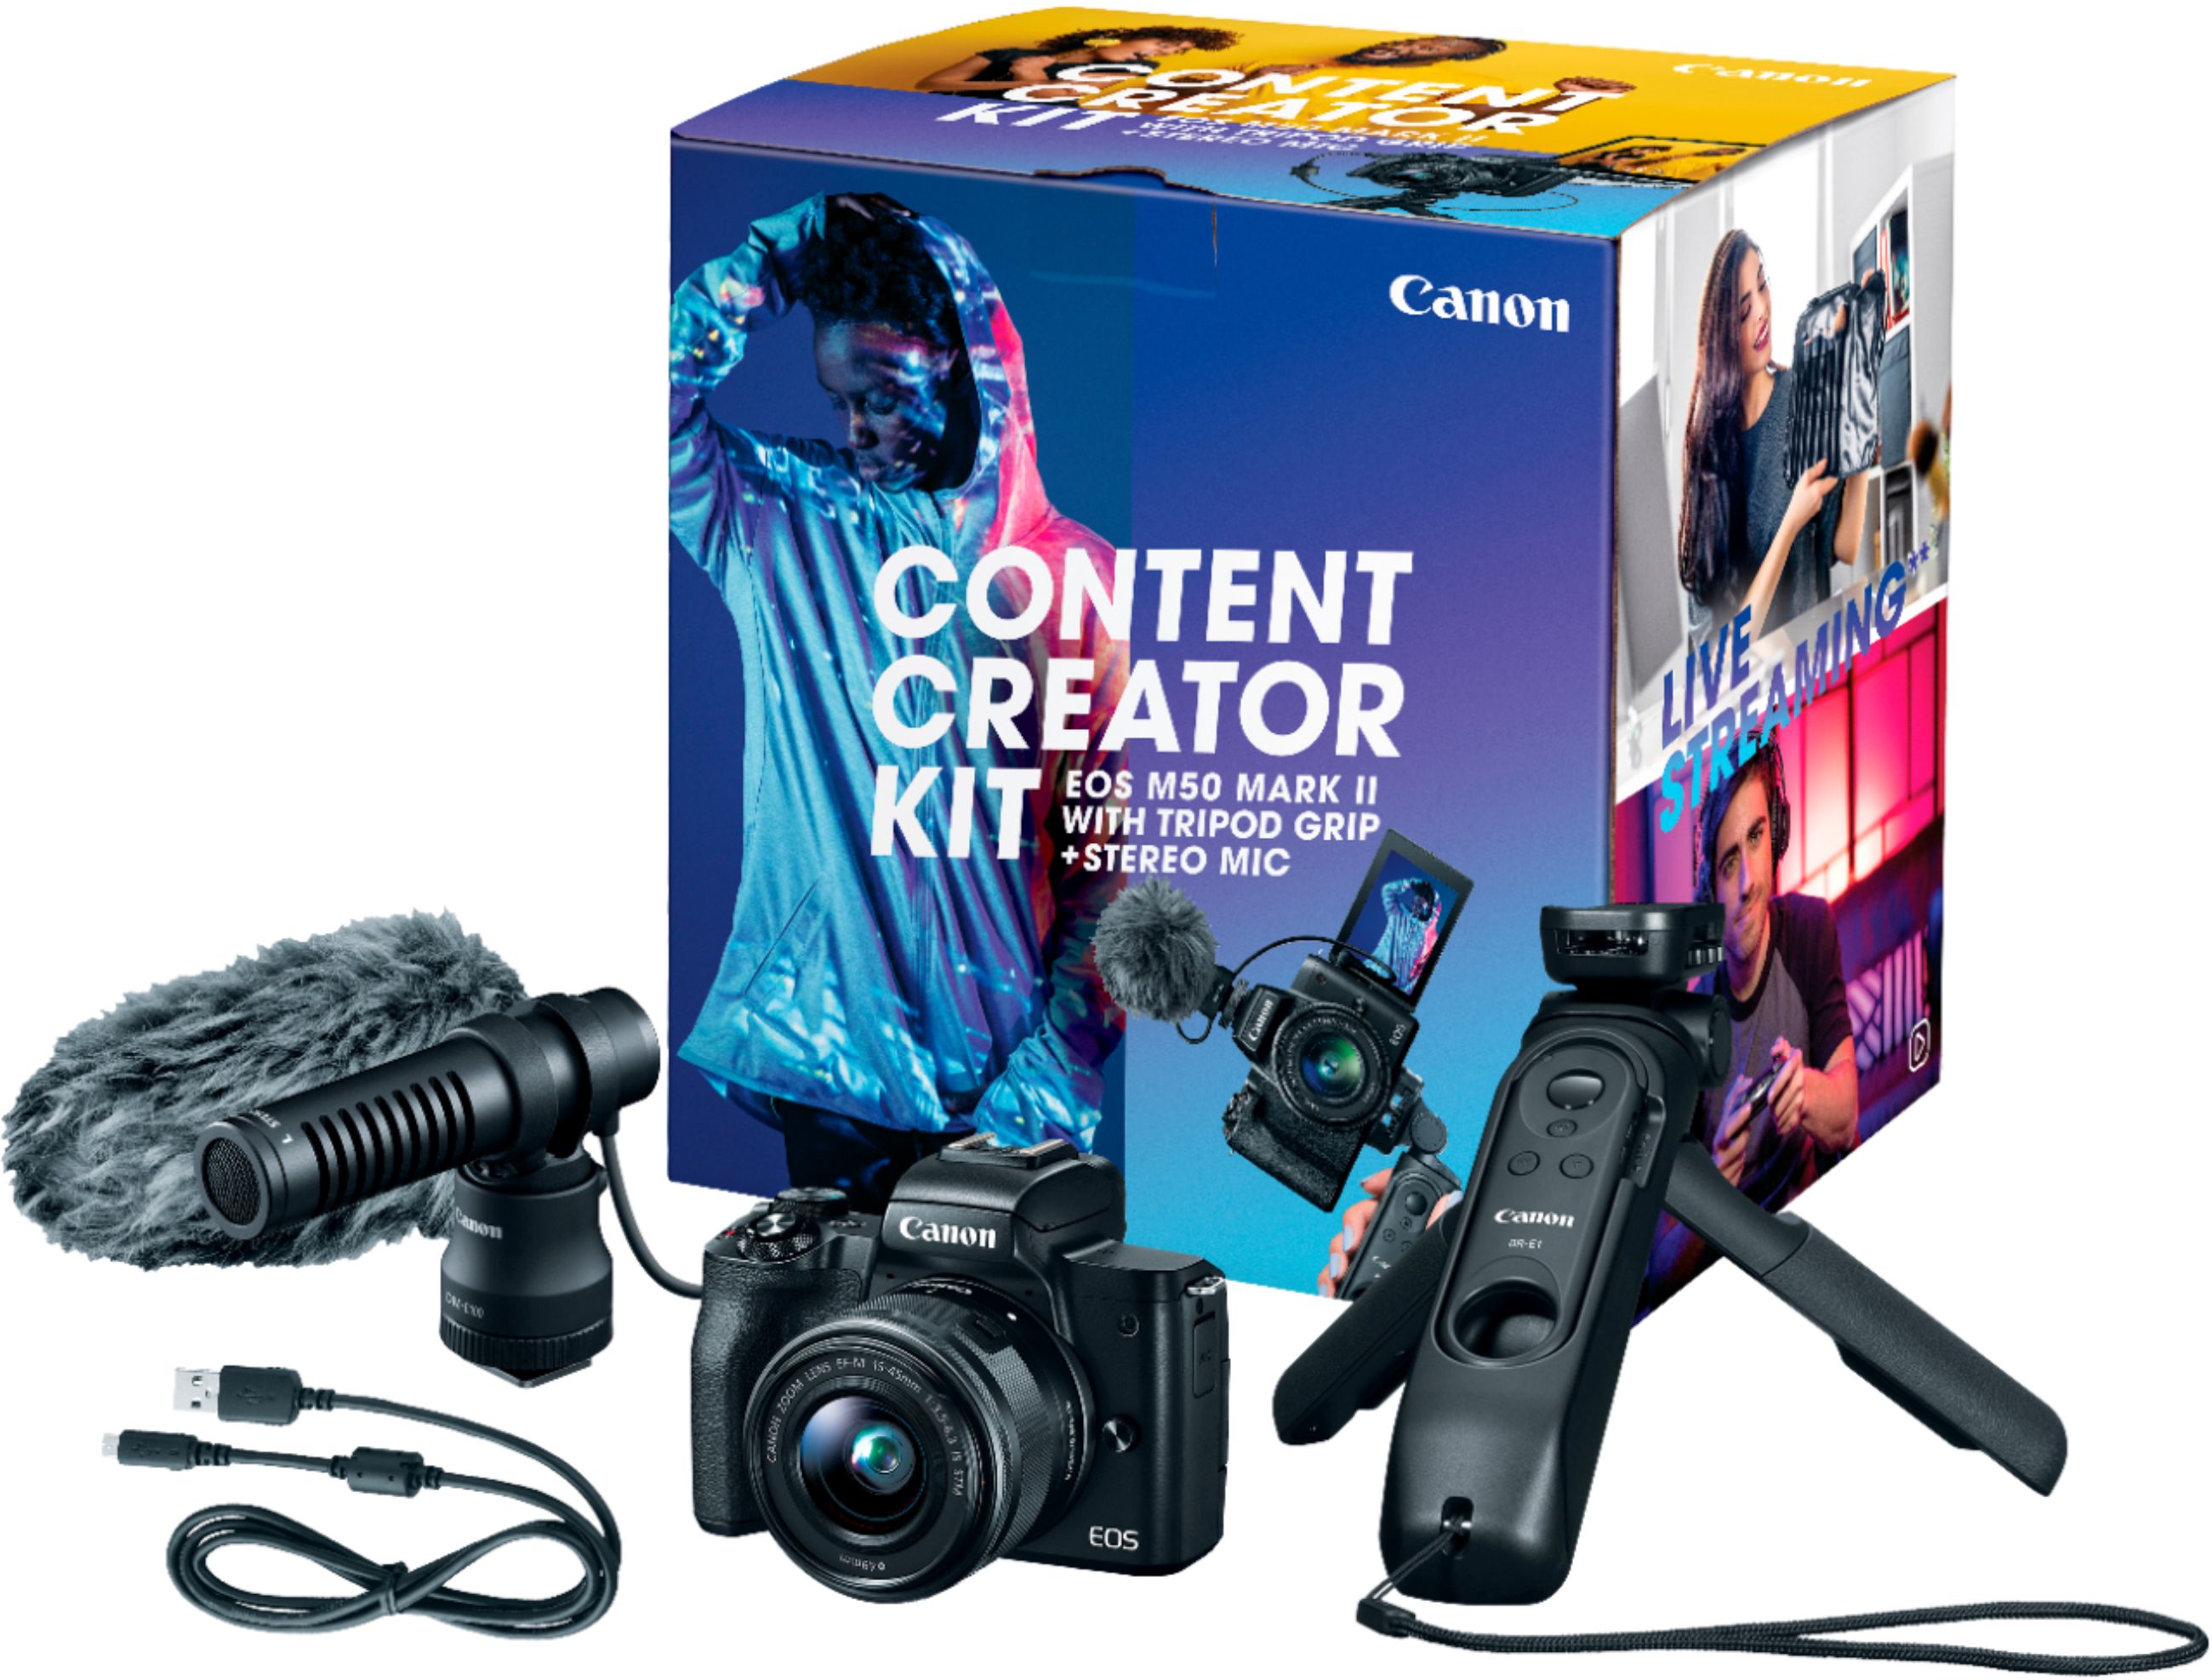 Shetland Crítico harina Canon EOS M50 Mark II Mirrorless Camera with EF-M 15-45mm Lens Content  Creator Kit Black 4728C052 - Best Buy